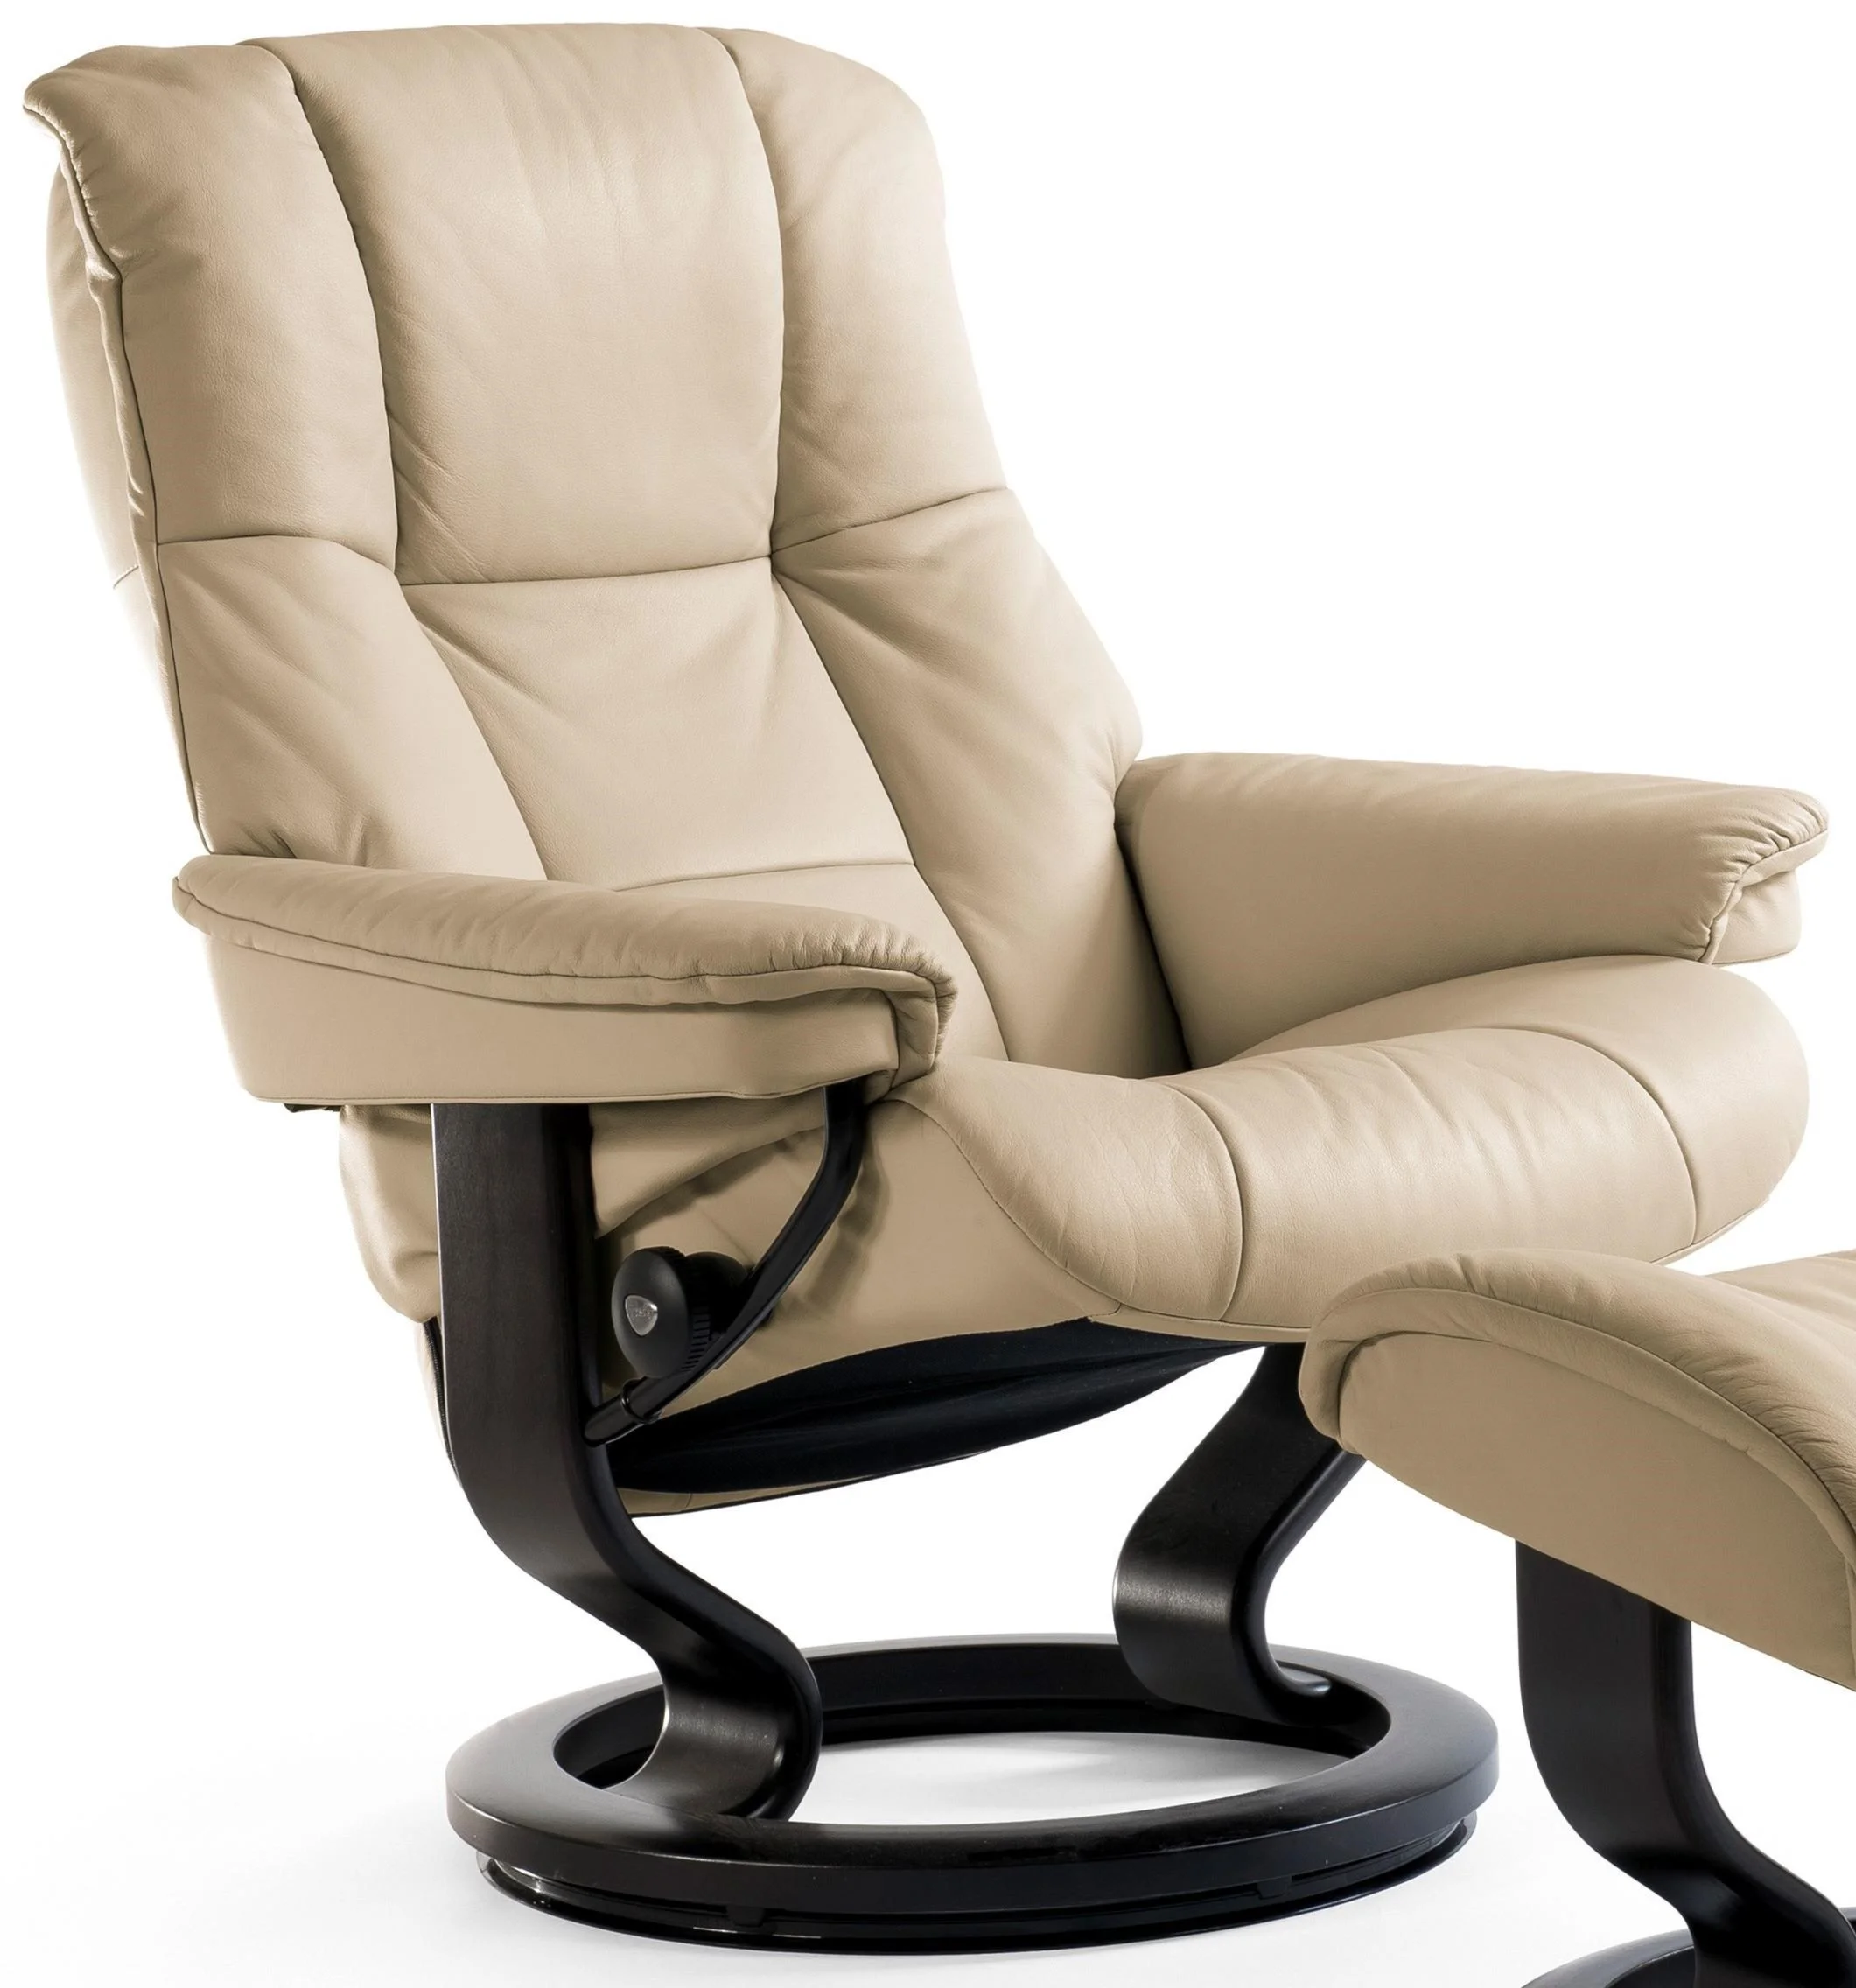 Stressless by Ekornes Mayfair Sprintz Reclining Three Chair | | Way Furniture Medium Recliner - Classic Base with